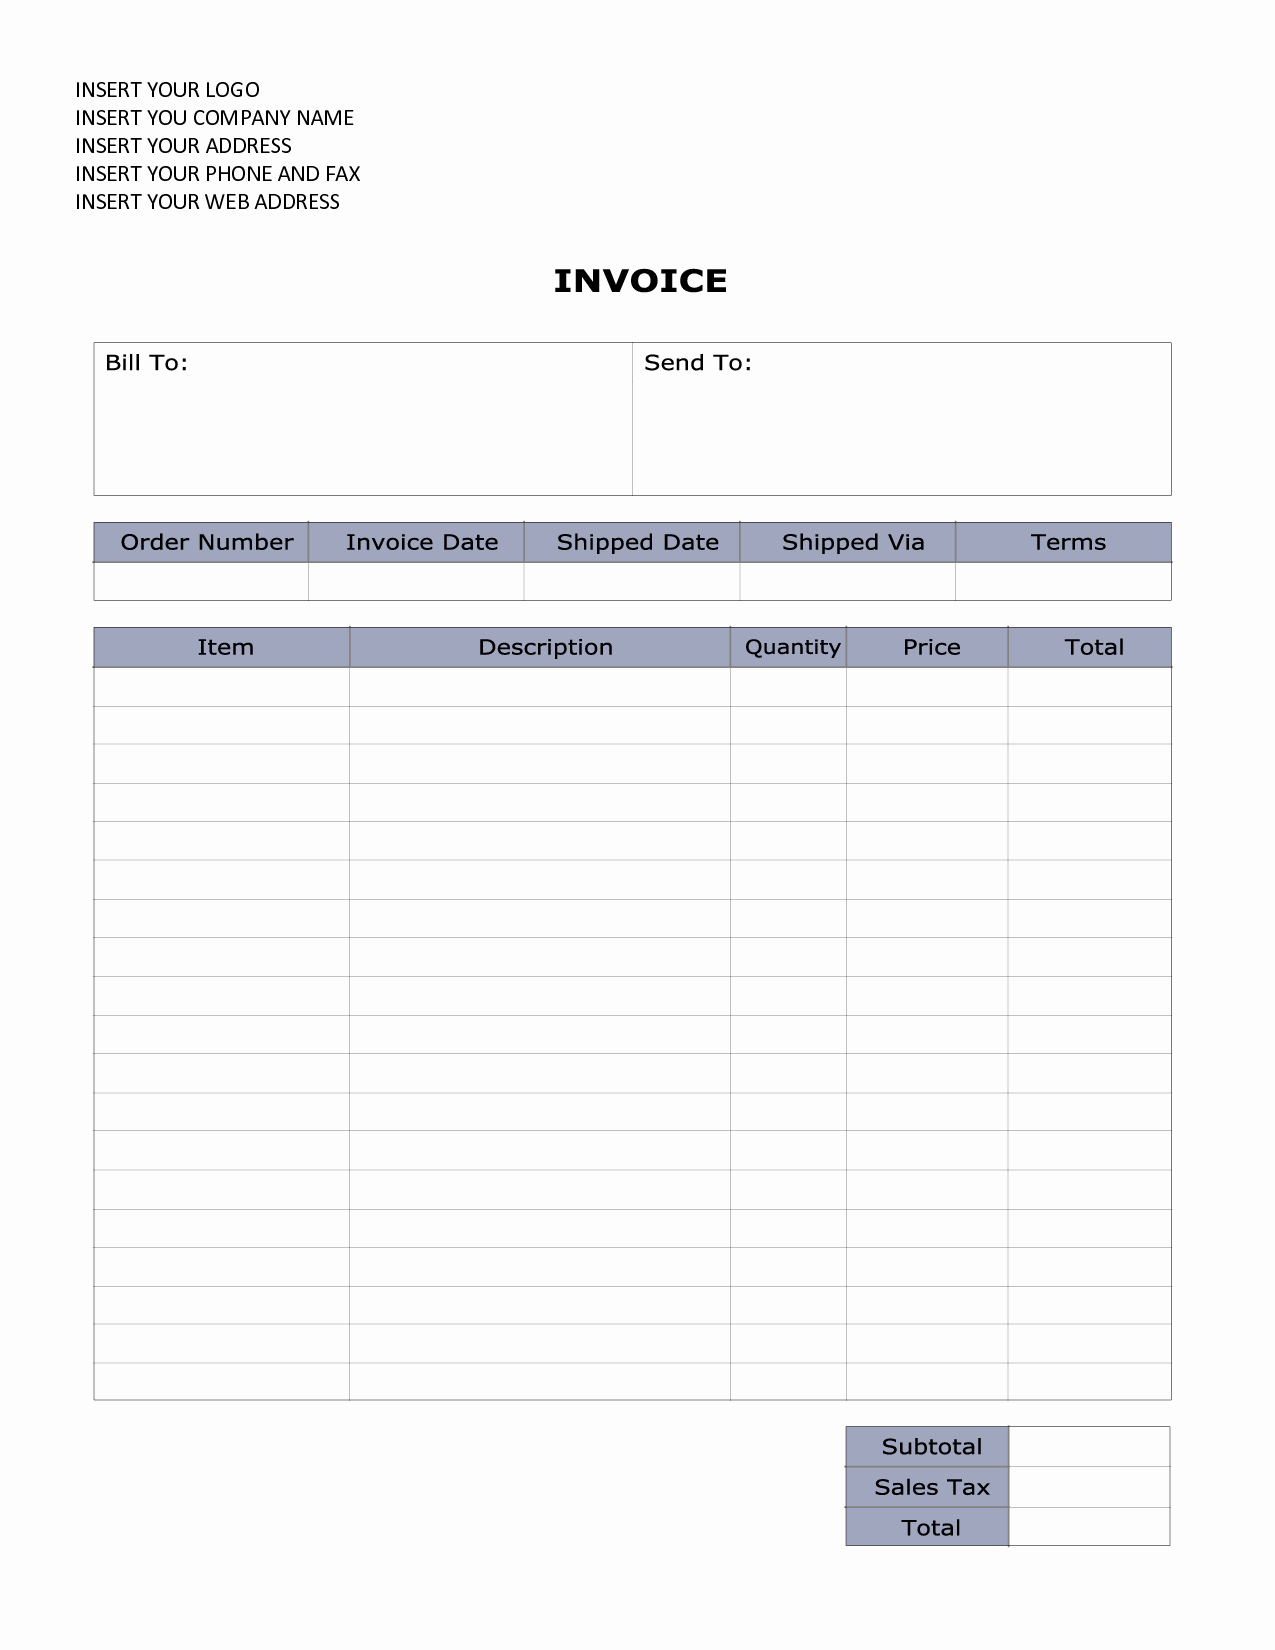 Microsoft Word Invoice Templates Free Luxury Invoice Template Word 2010